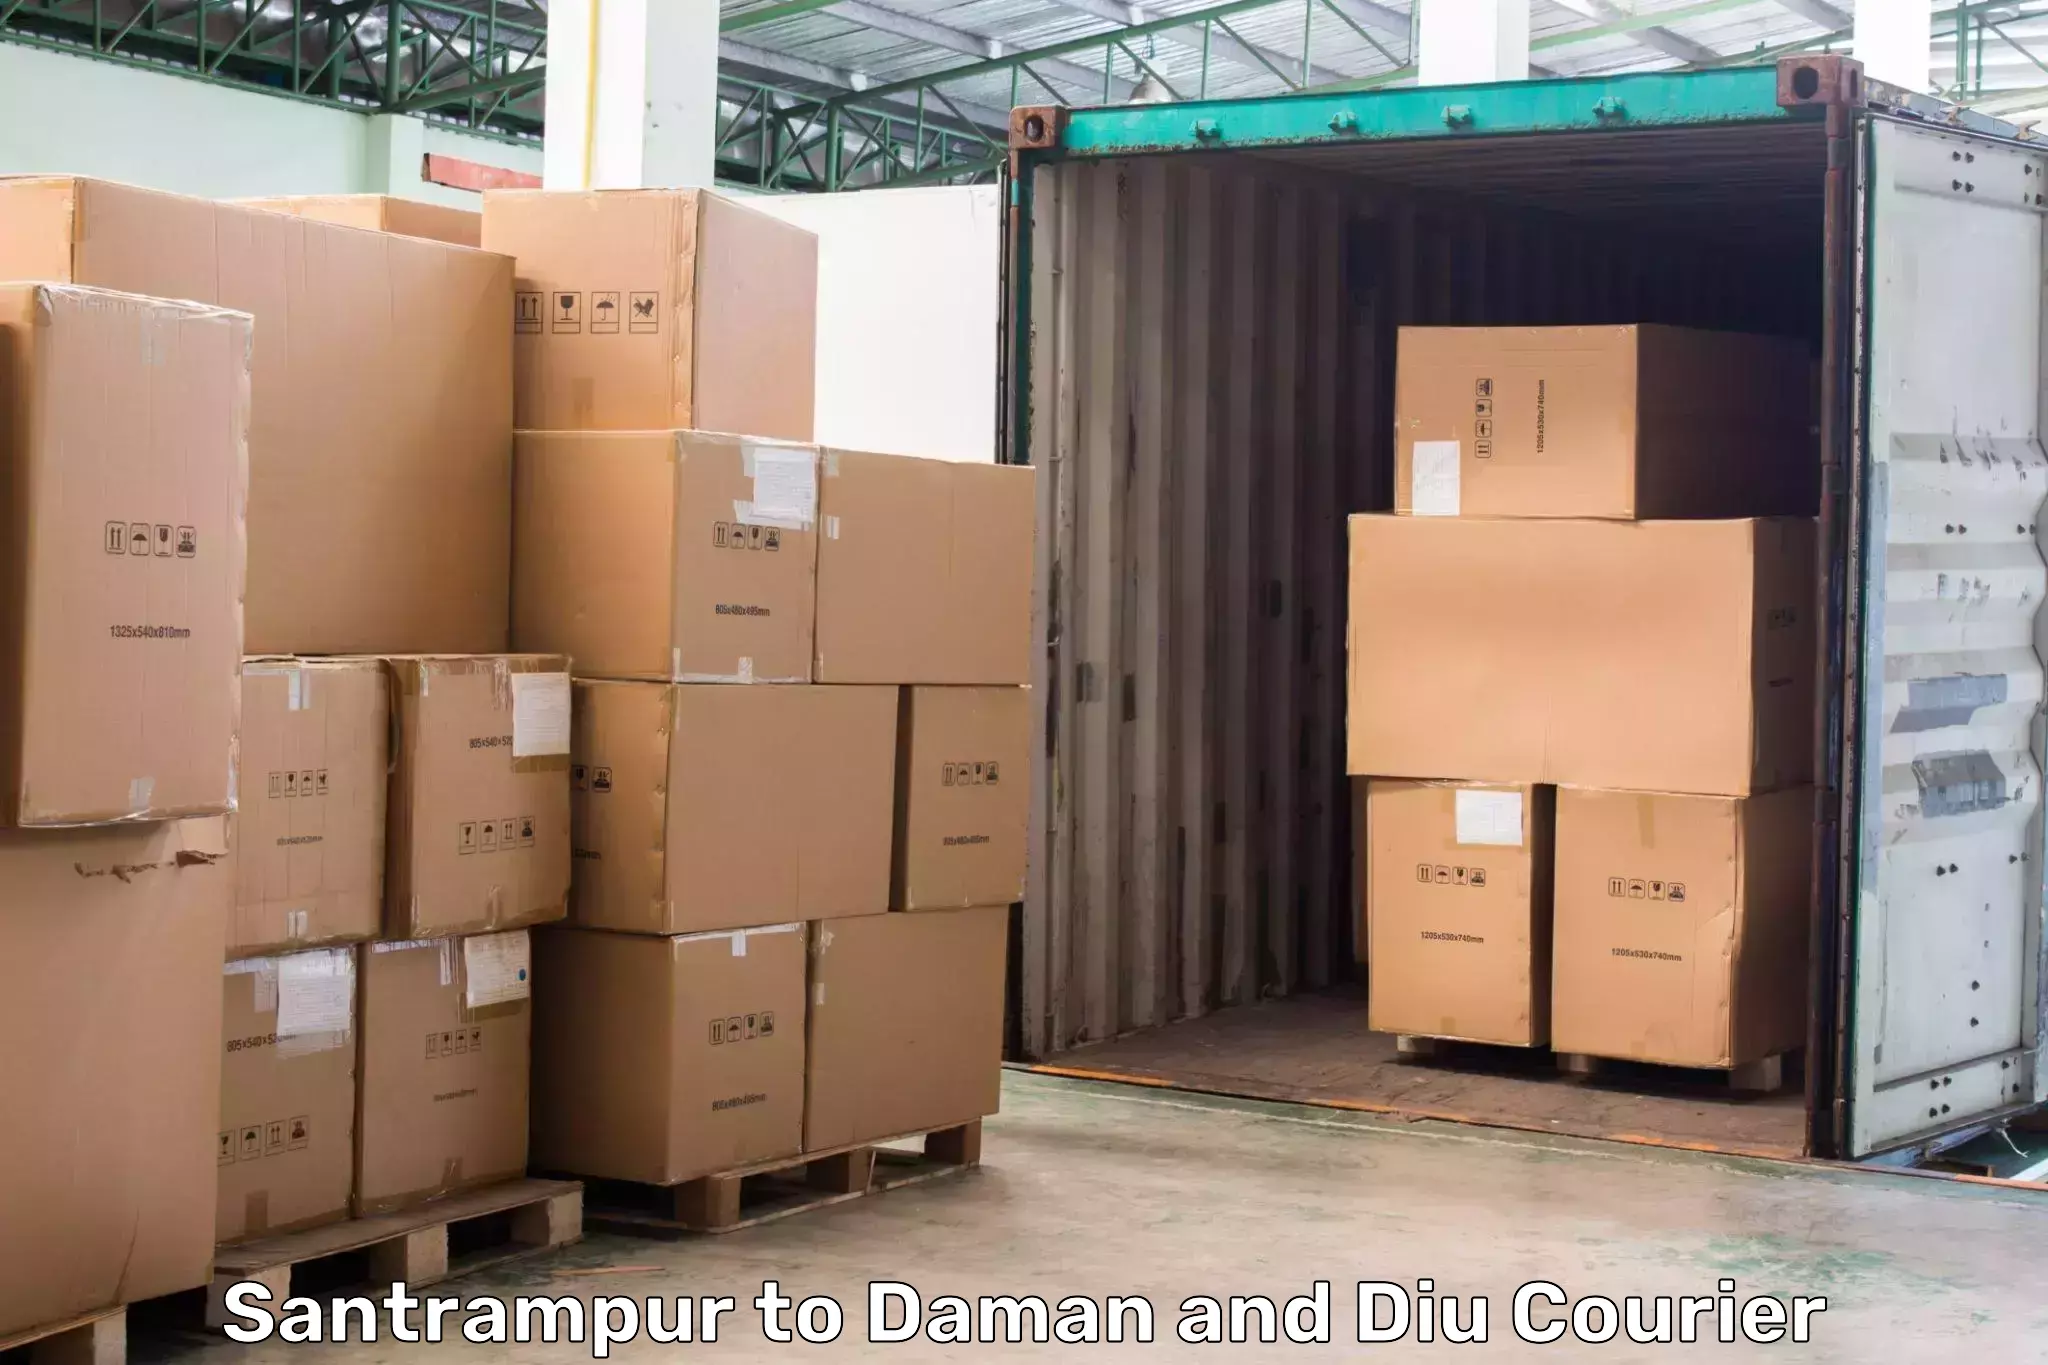 Courier service comparison Santrampur to Diu